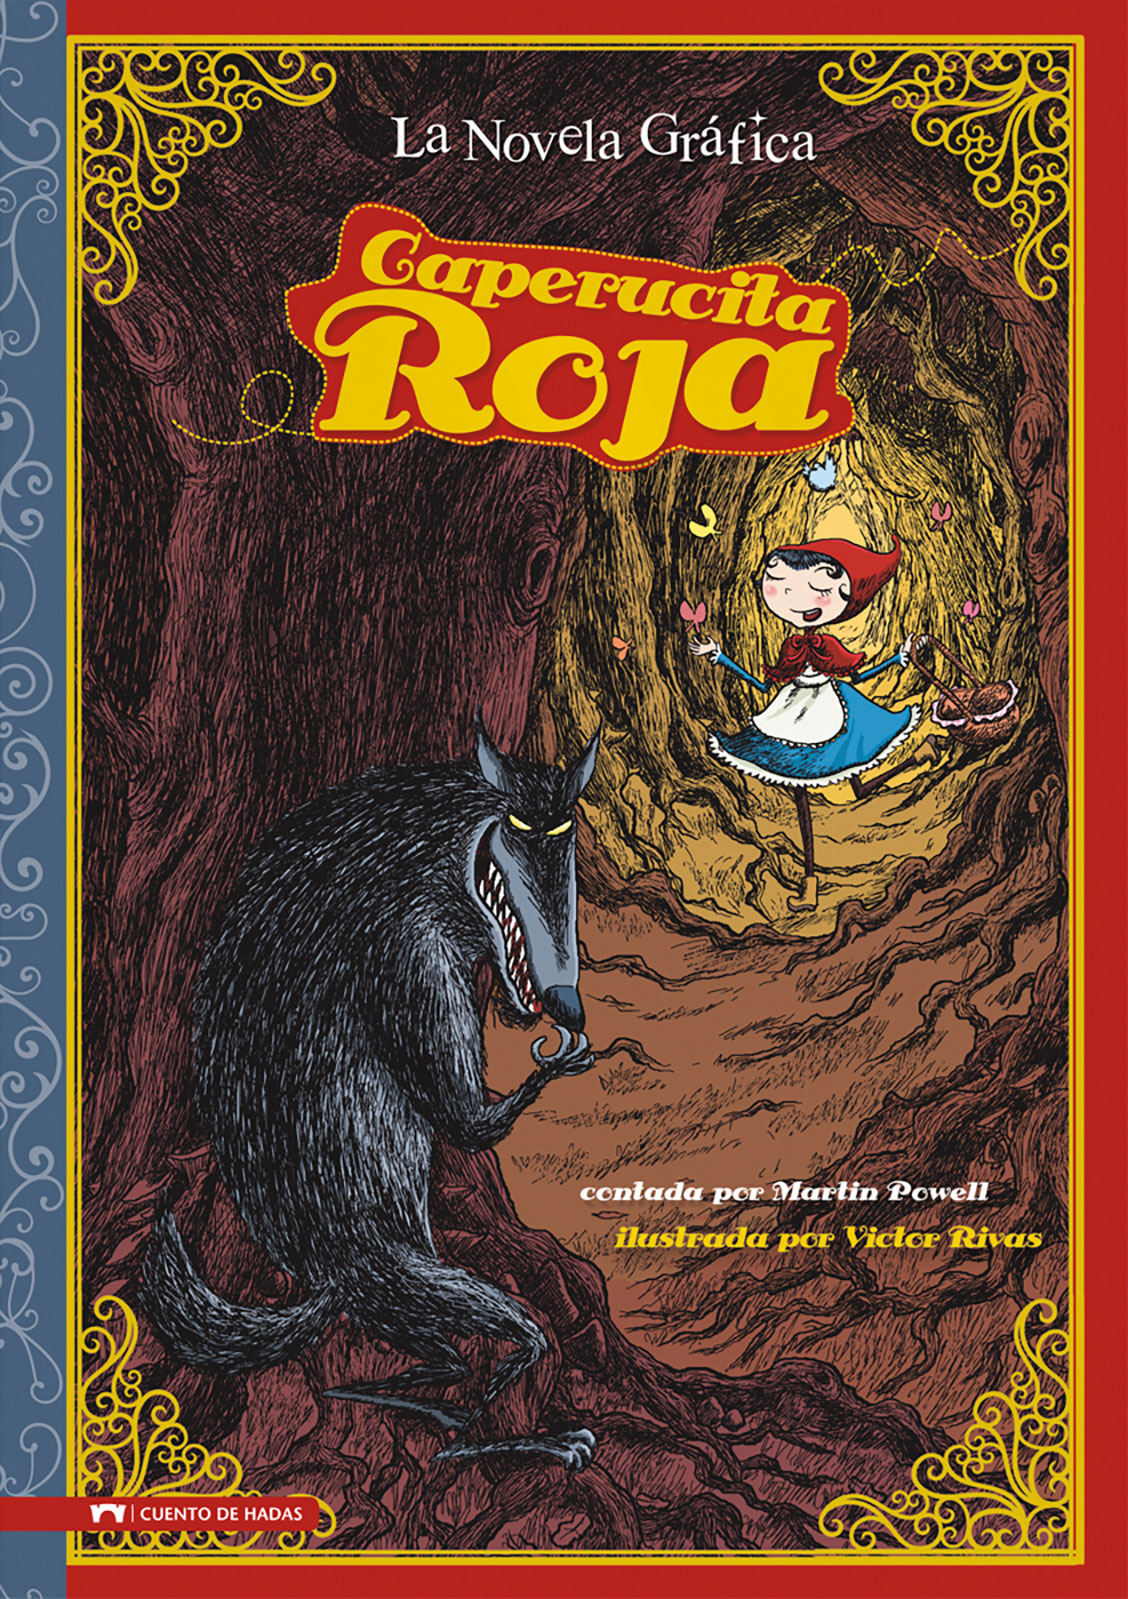 La Novela Gráfica: Caperucita Roja Level 4+ Spanish Reader